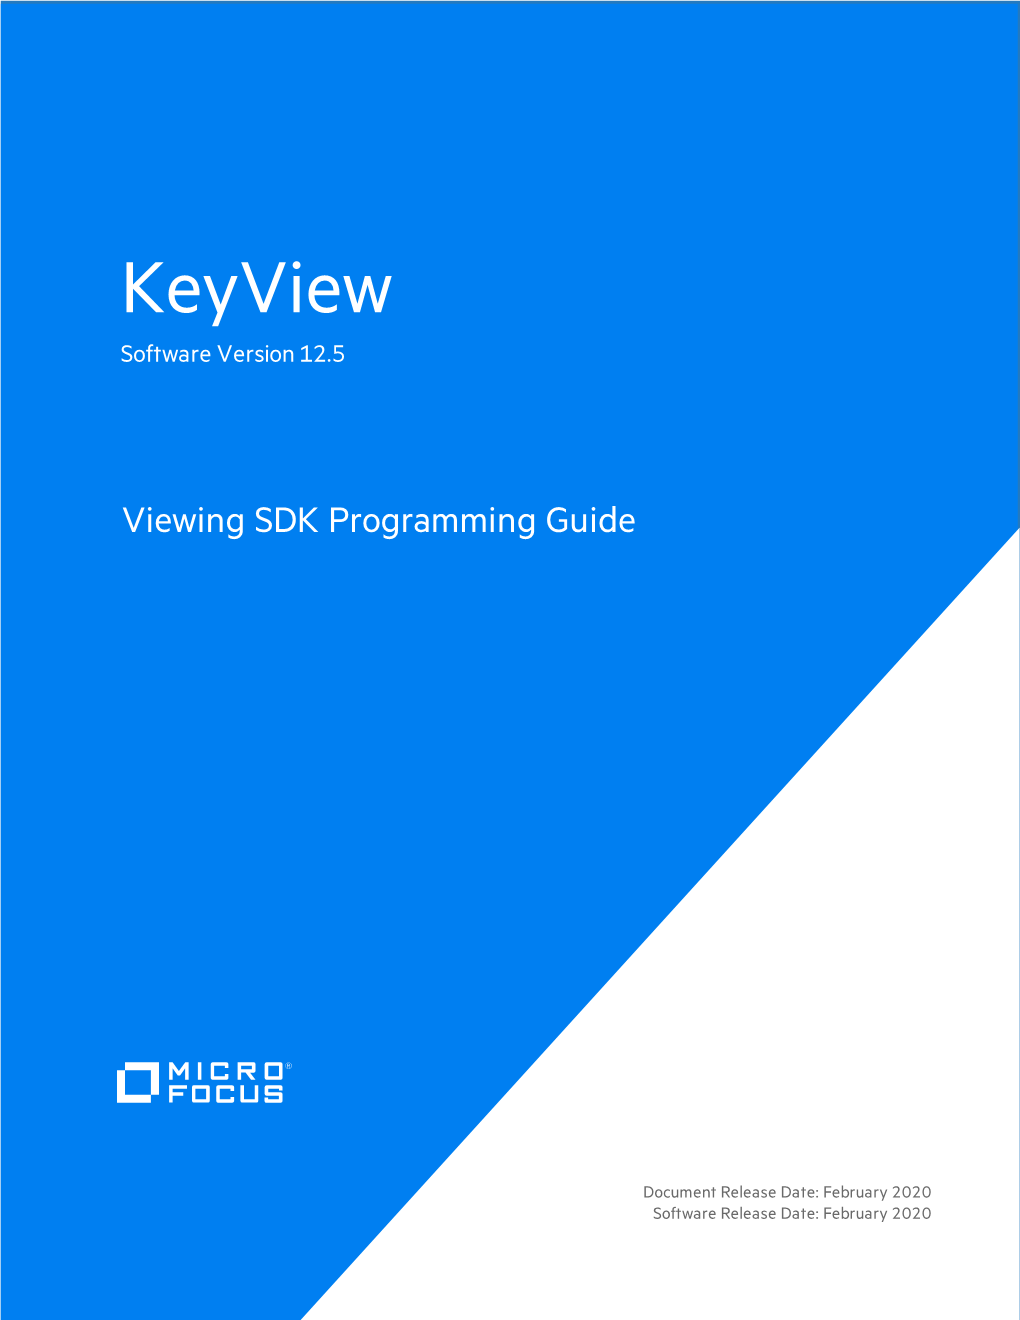 IDOL Keyview Viewing SDK 12.5 Programming Guide